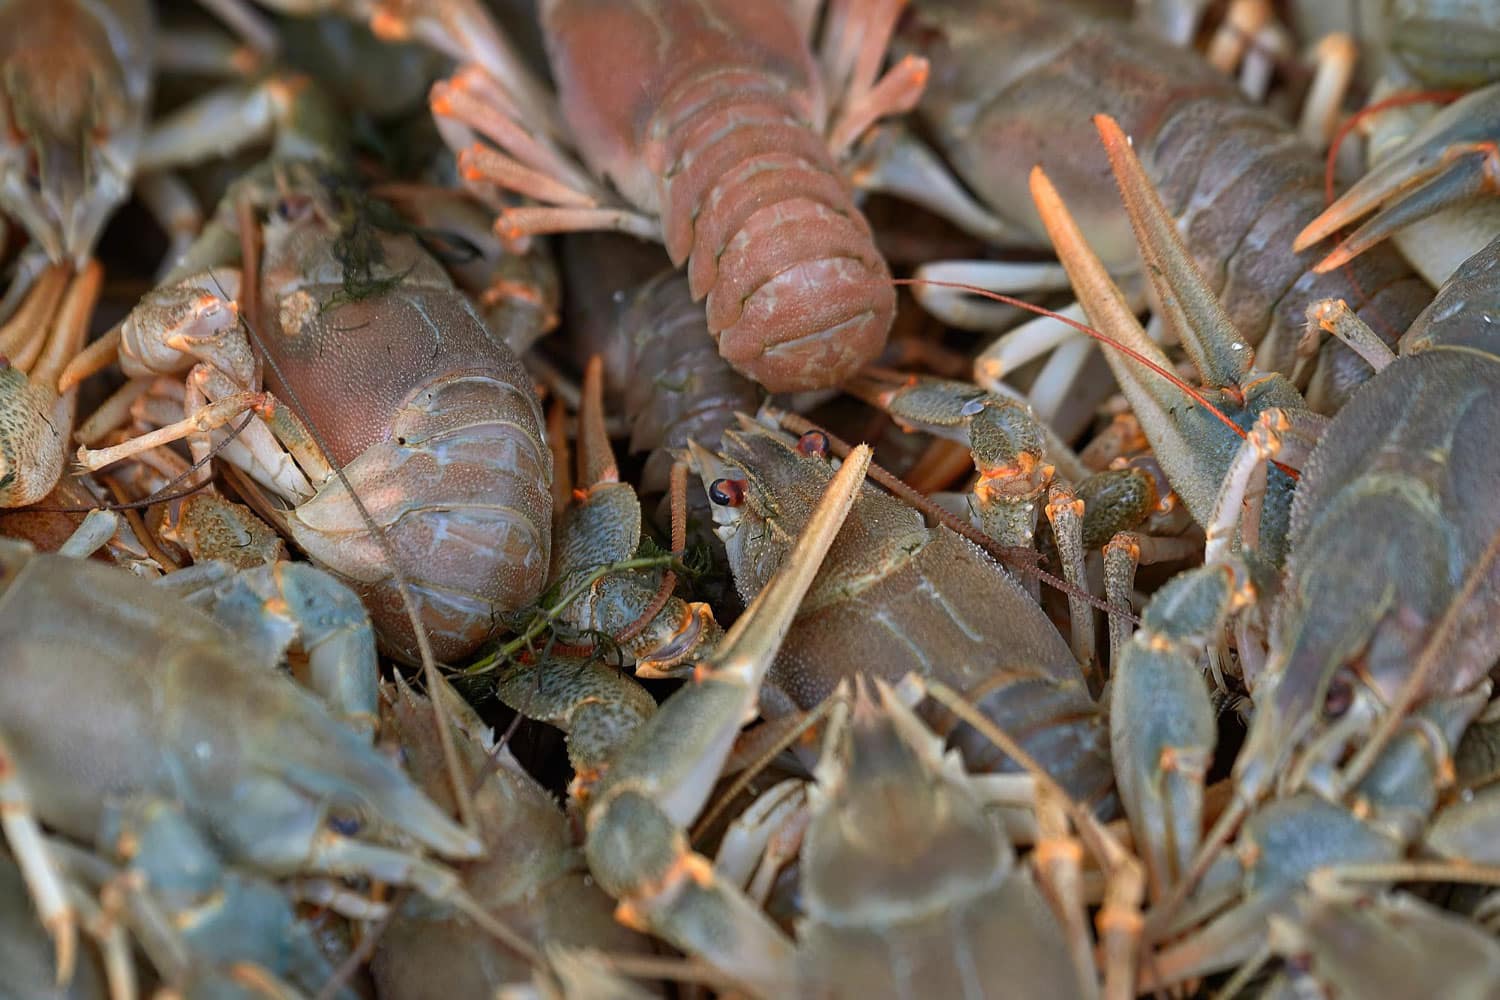 Image showing crayfish